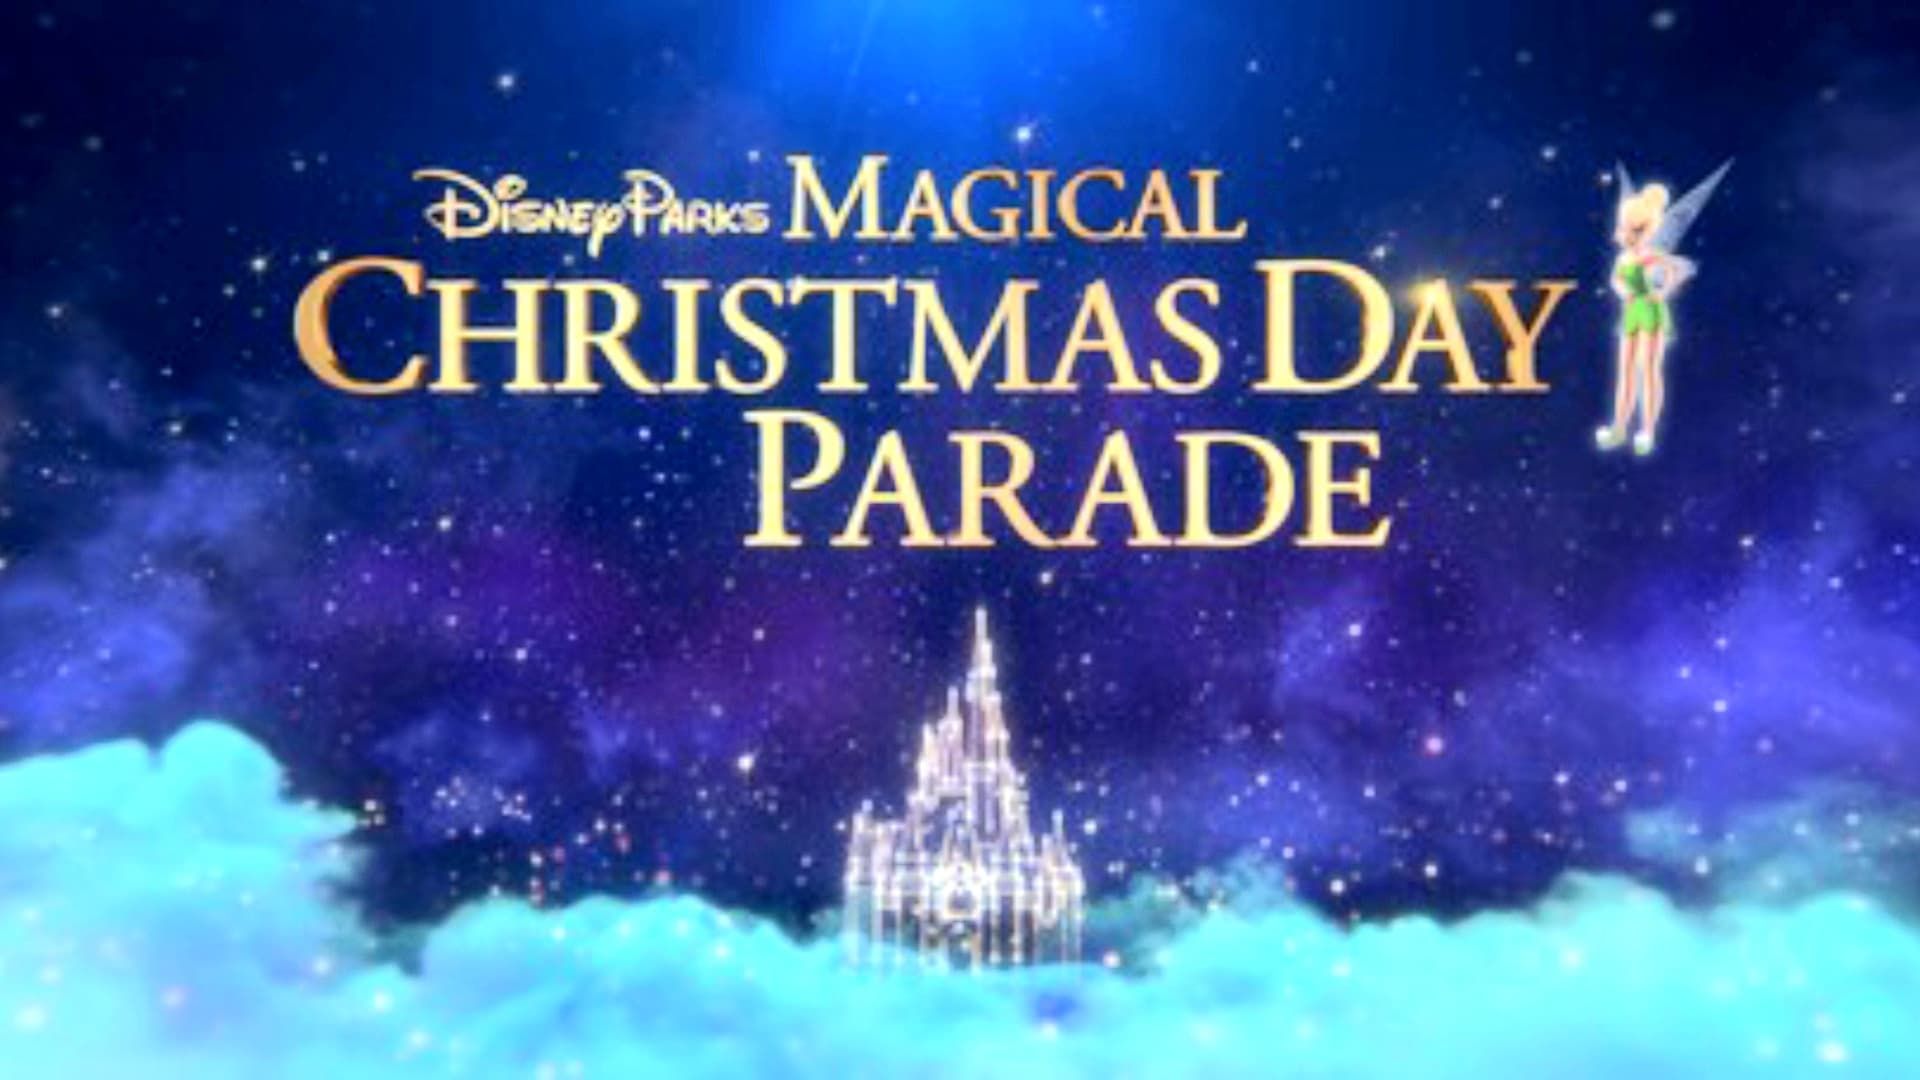 Disney Parks Magical Christmas Day Parade background